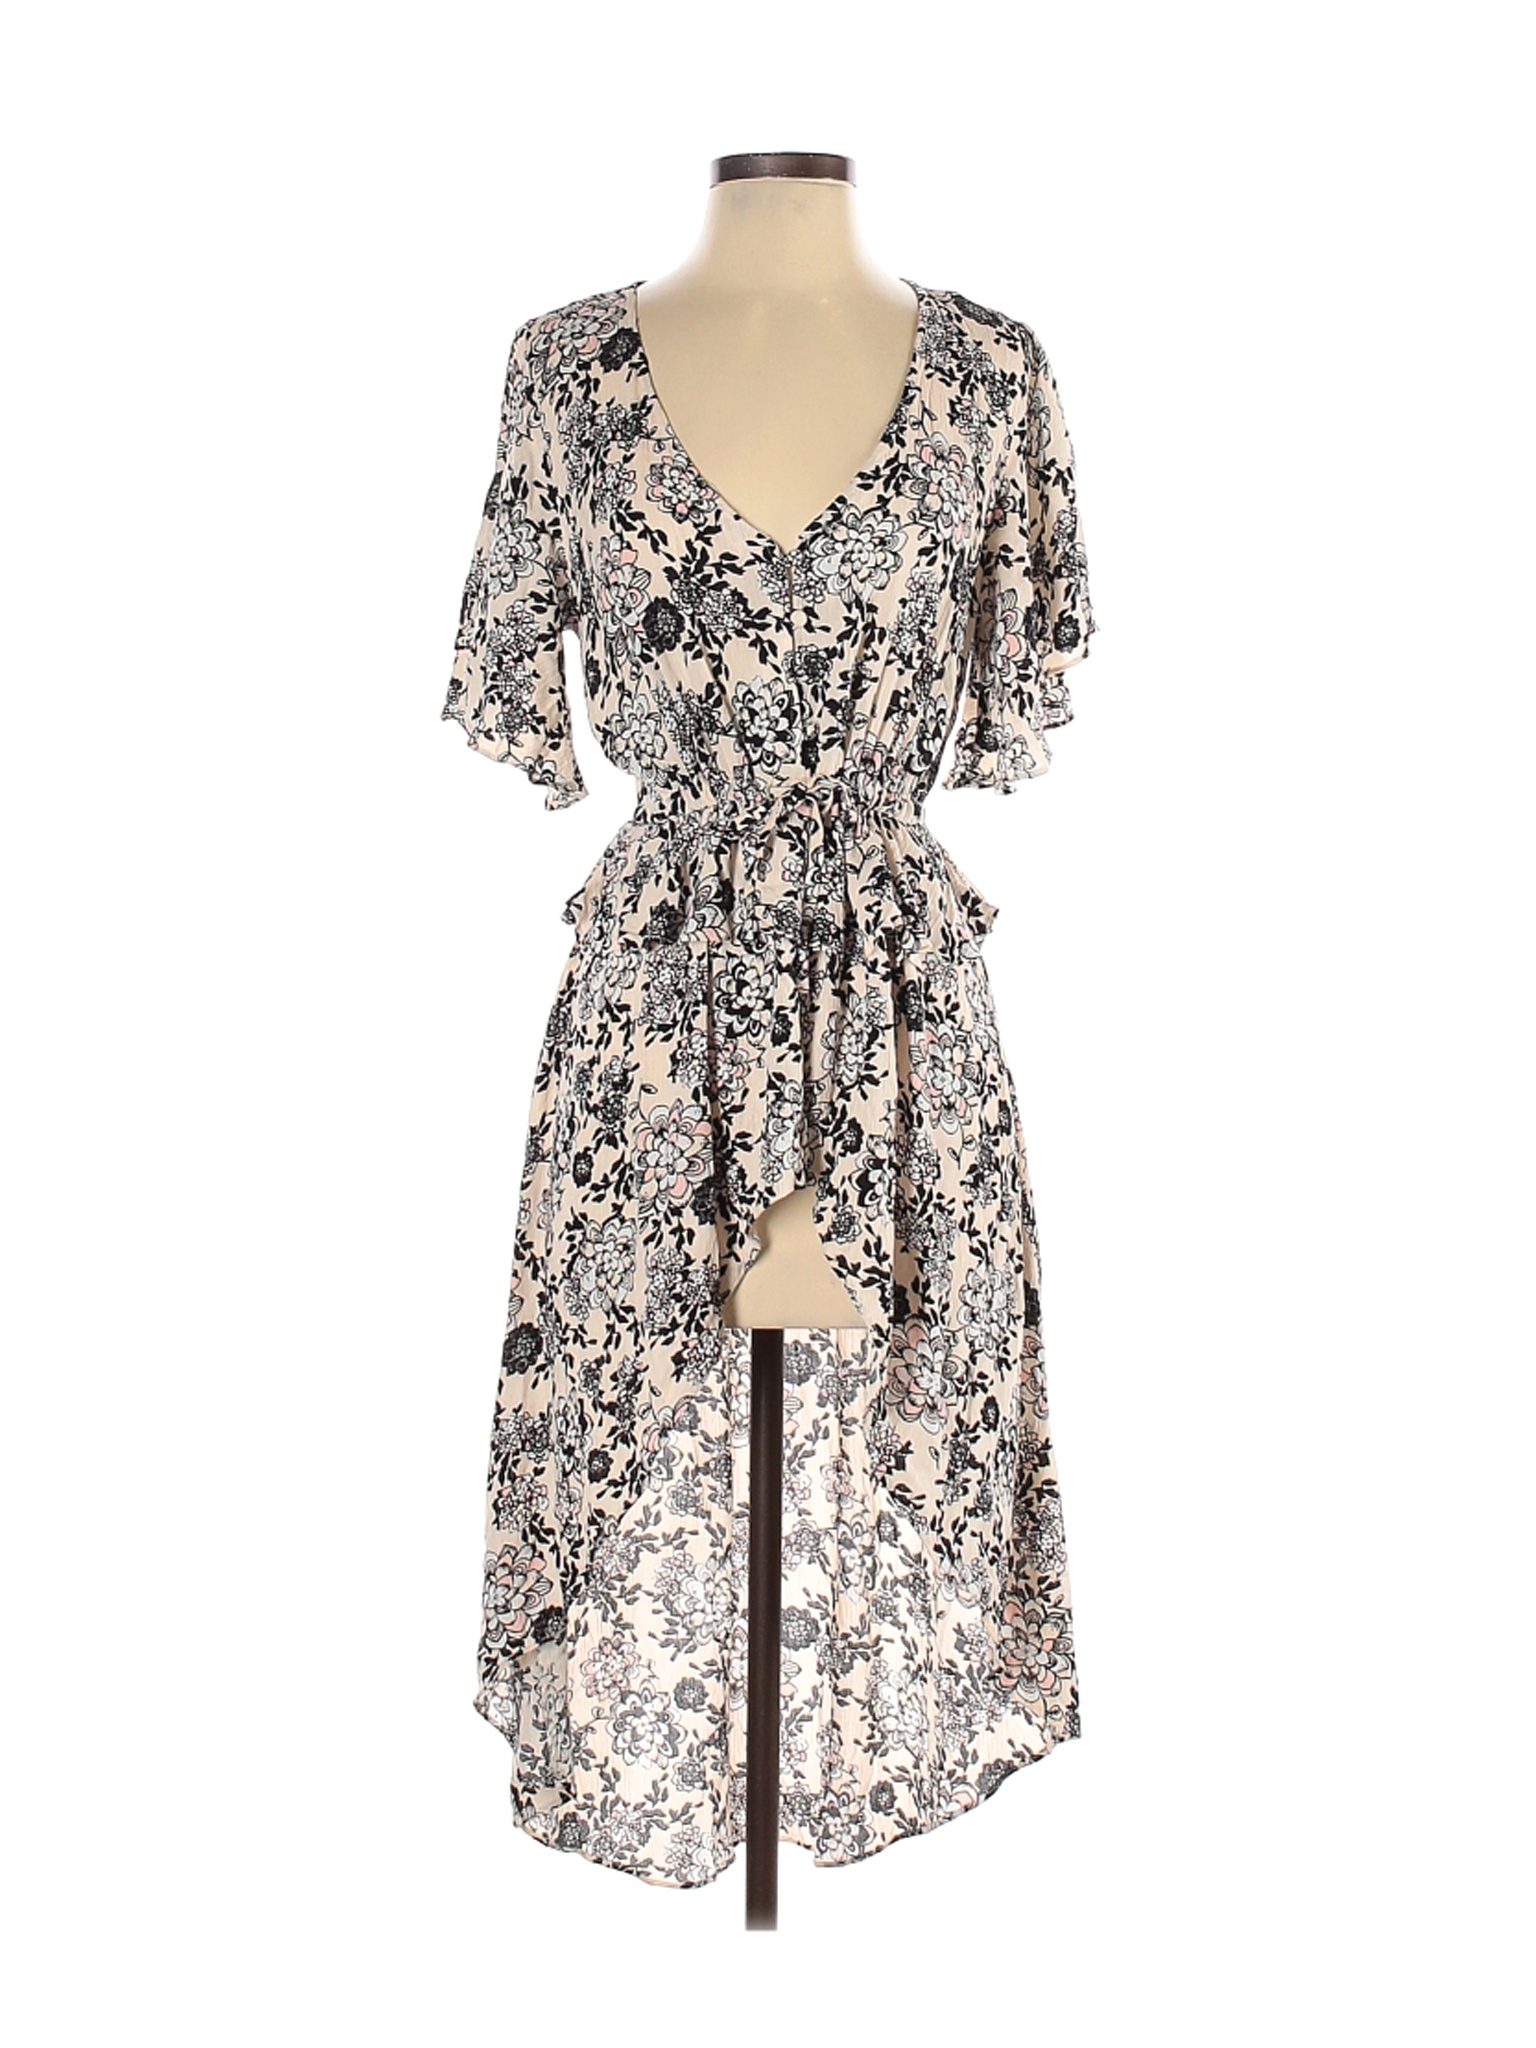 Indigo Thread Co. Women Ivory Casual Dress S | eBay